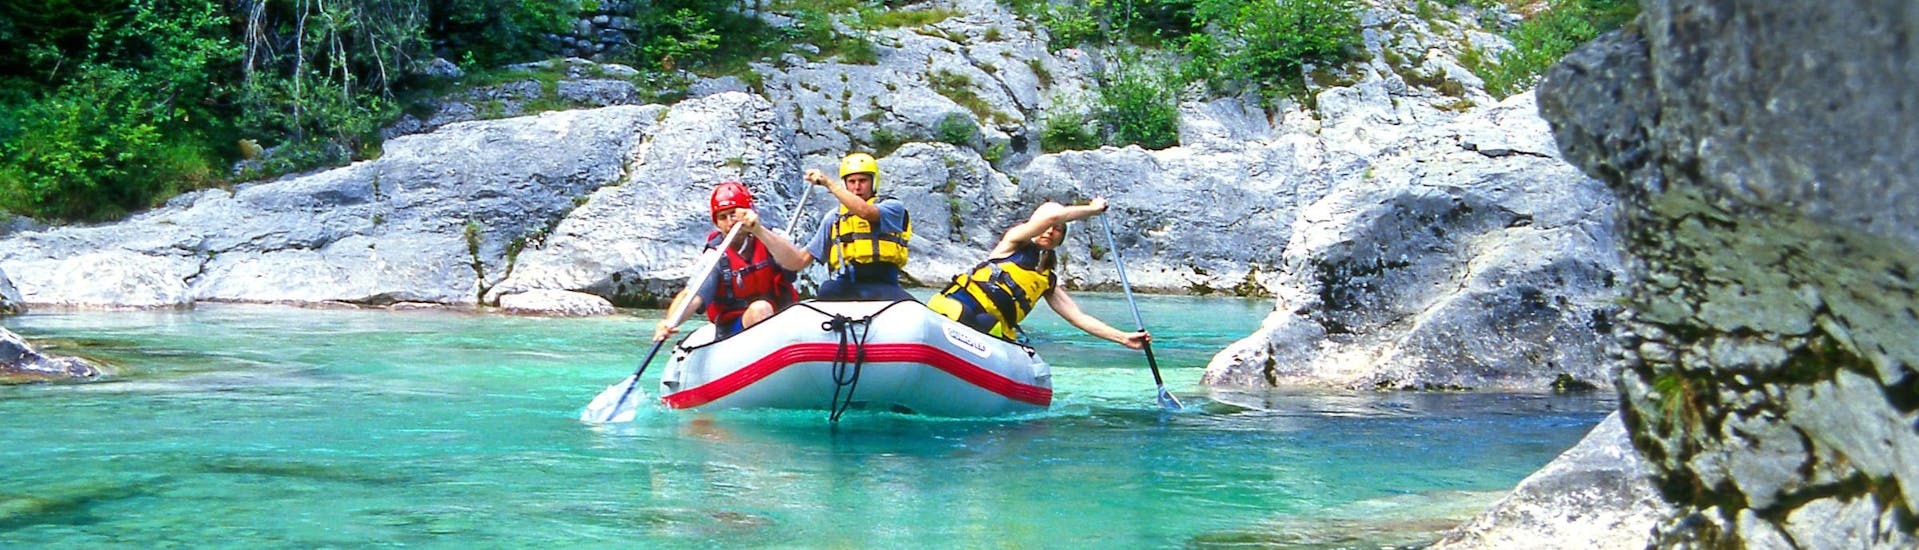 Eine Gruppe junger Menschen erfreut sich an Wildwasser Action beim Rafting & Canyoning Hotspot Soča.